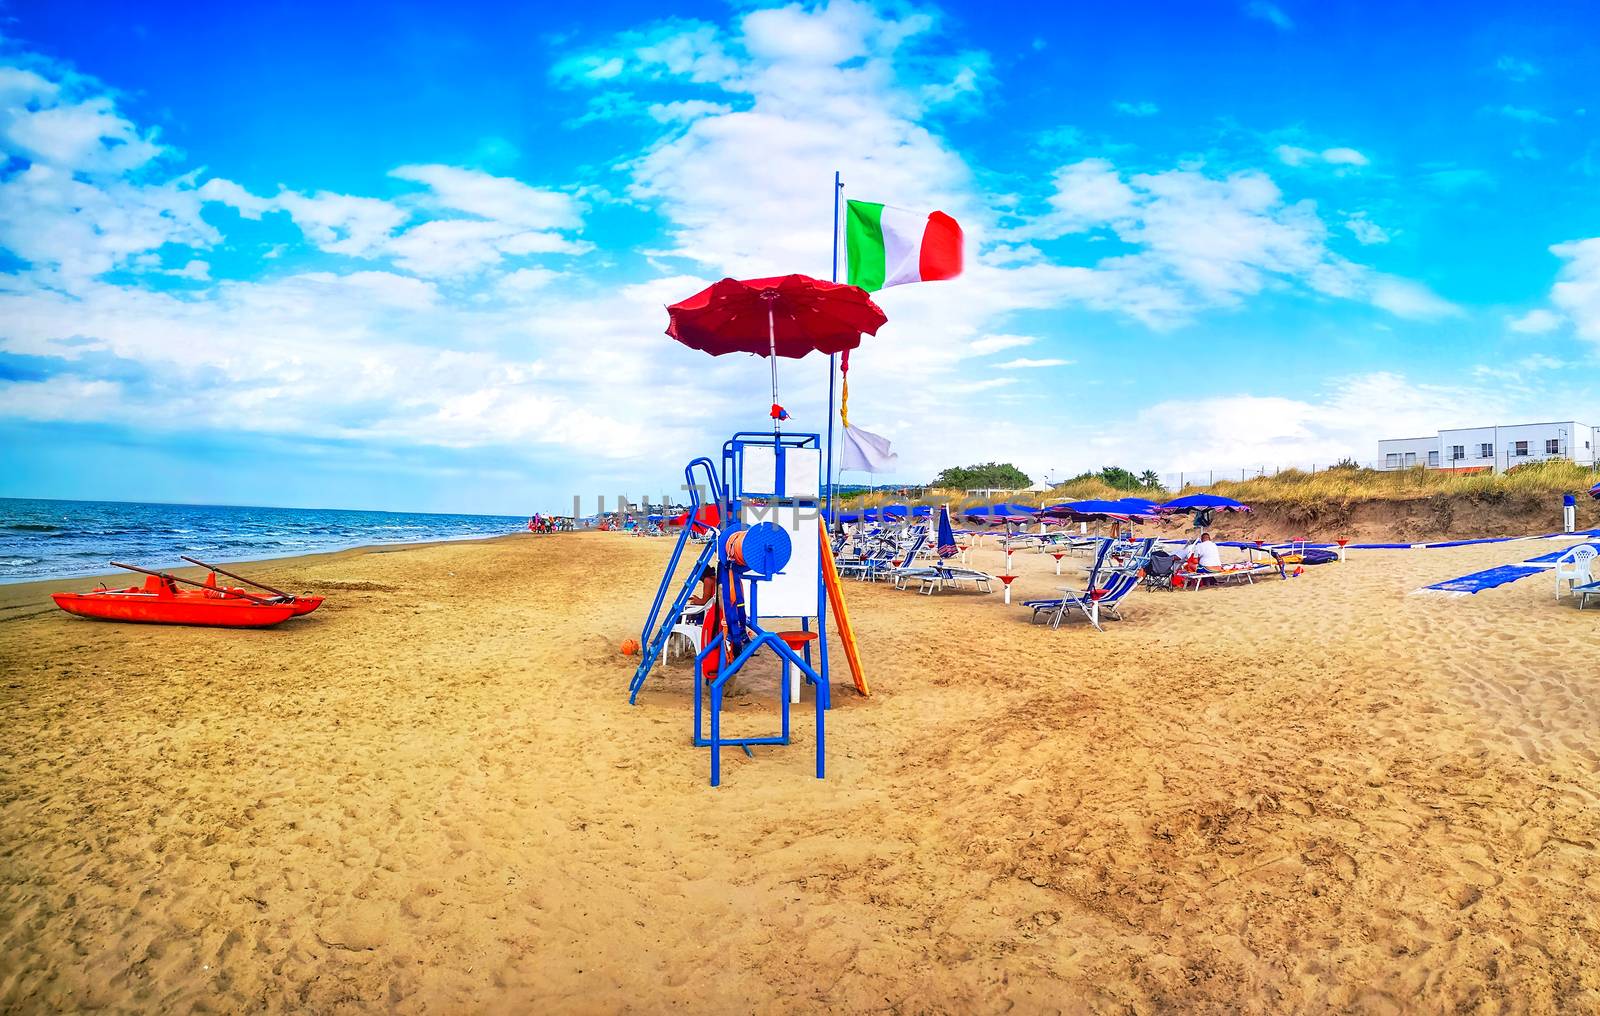 italian beach italy flag lifeguard station .